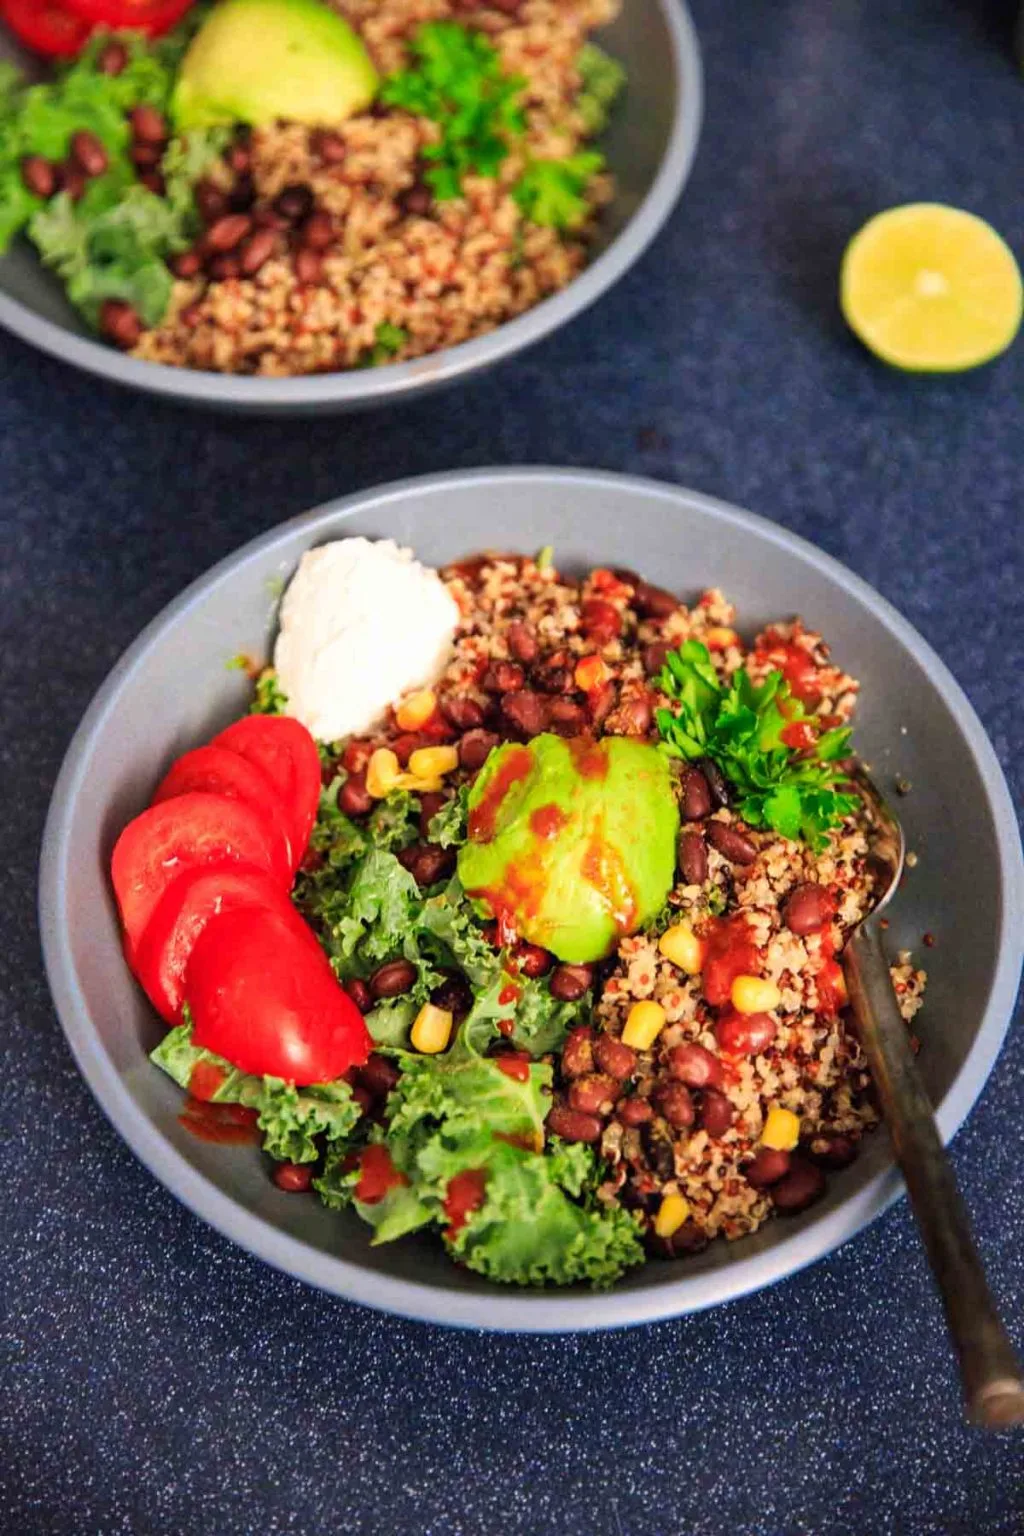 A customizable vegan and gluten-free buddha bowl with kale, quinoa, tomato, avocado, black beans, corn, and more!